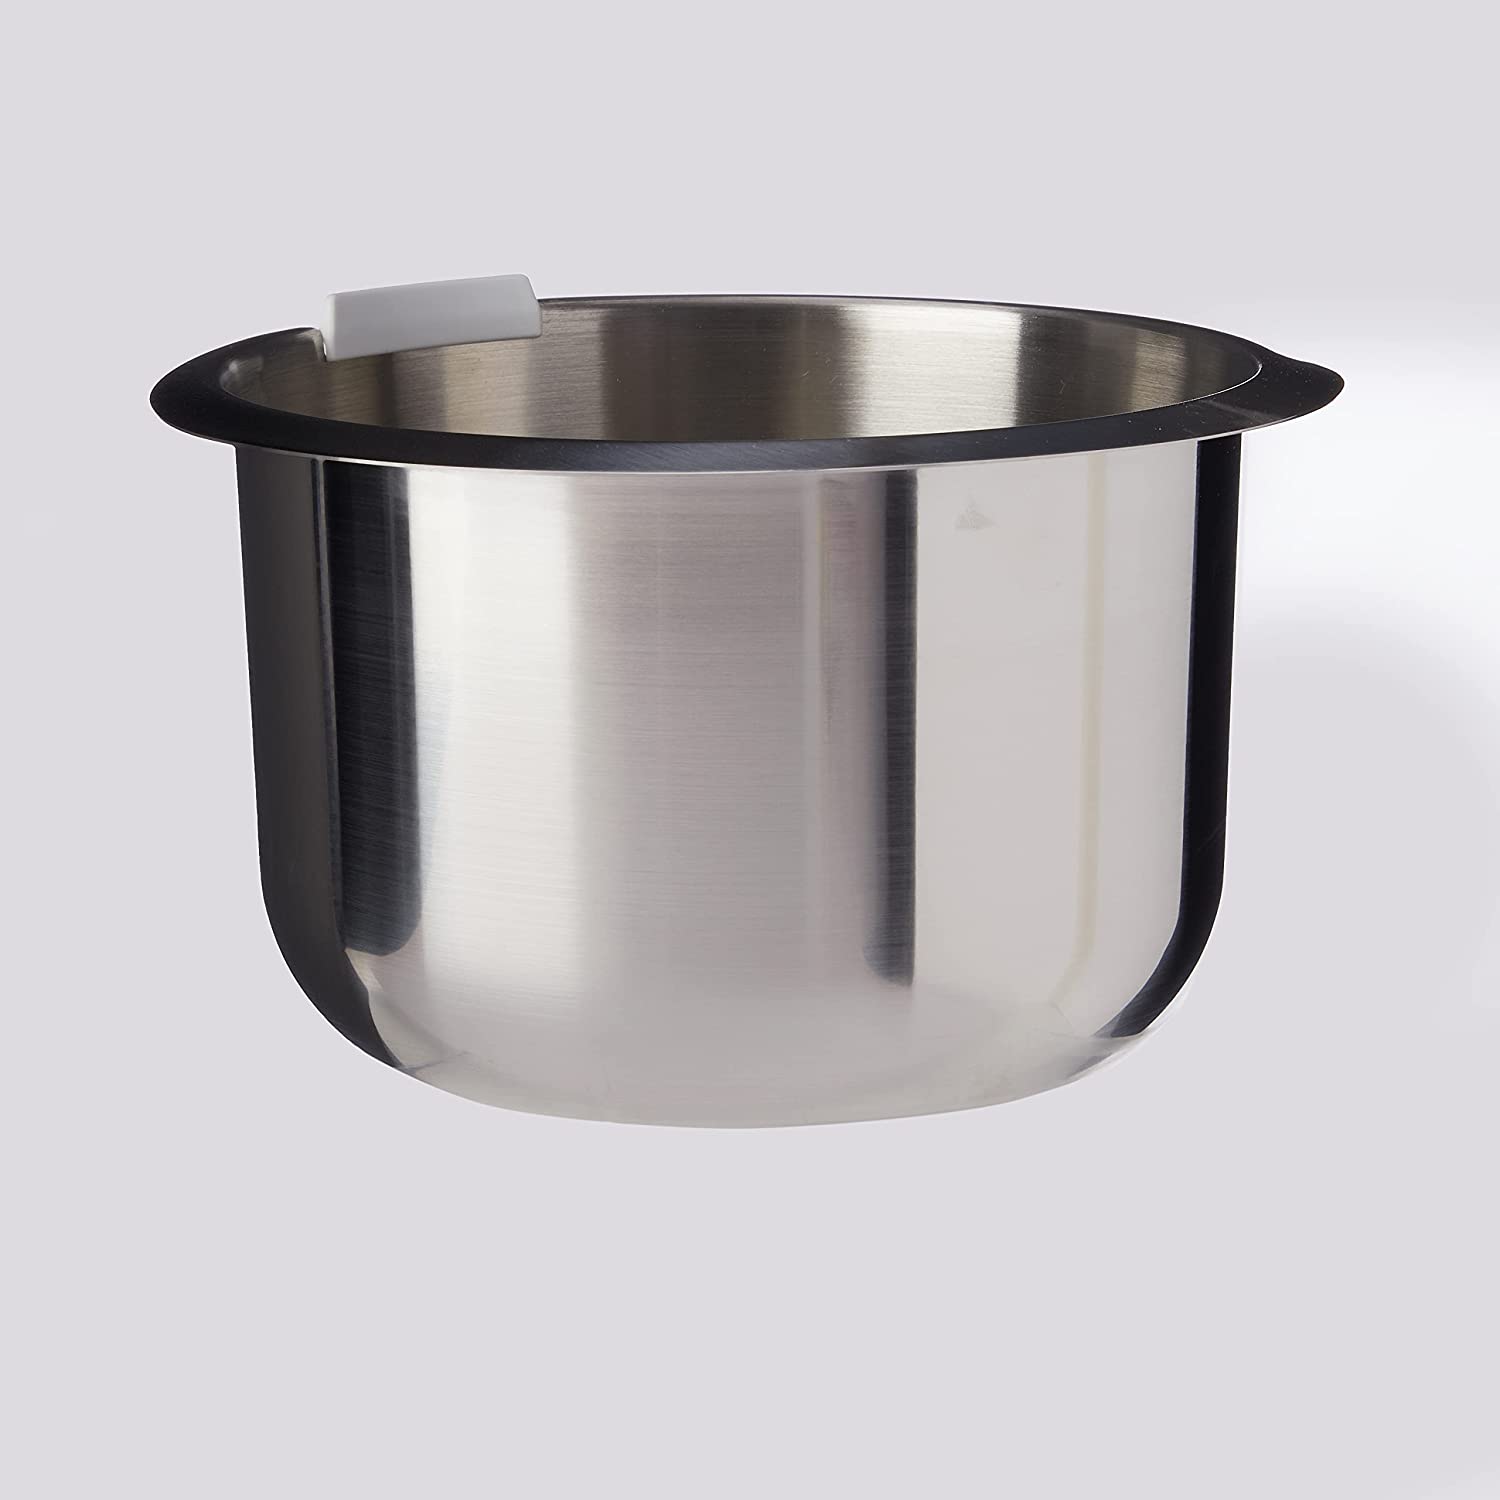 Bosch Hausgerate Bosch MUZ4ER2 - bowl - stainless steel